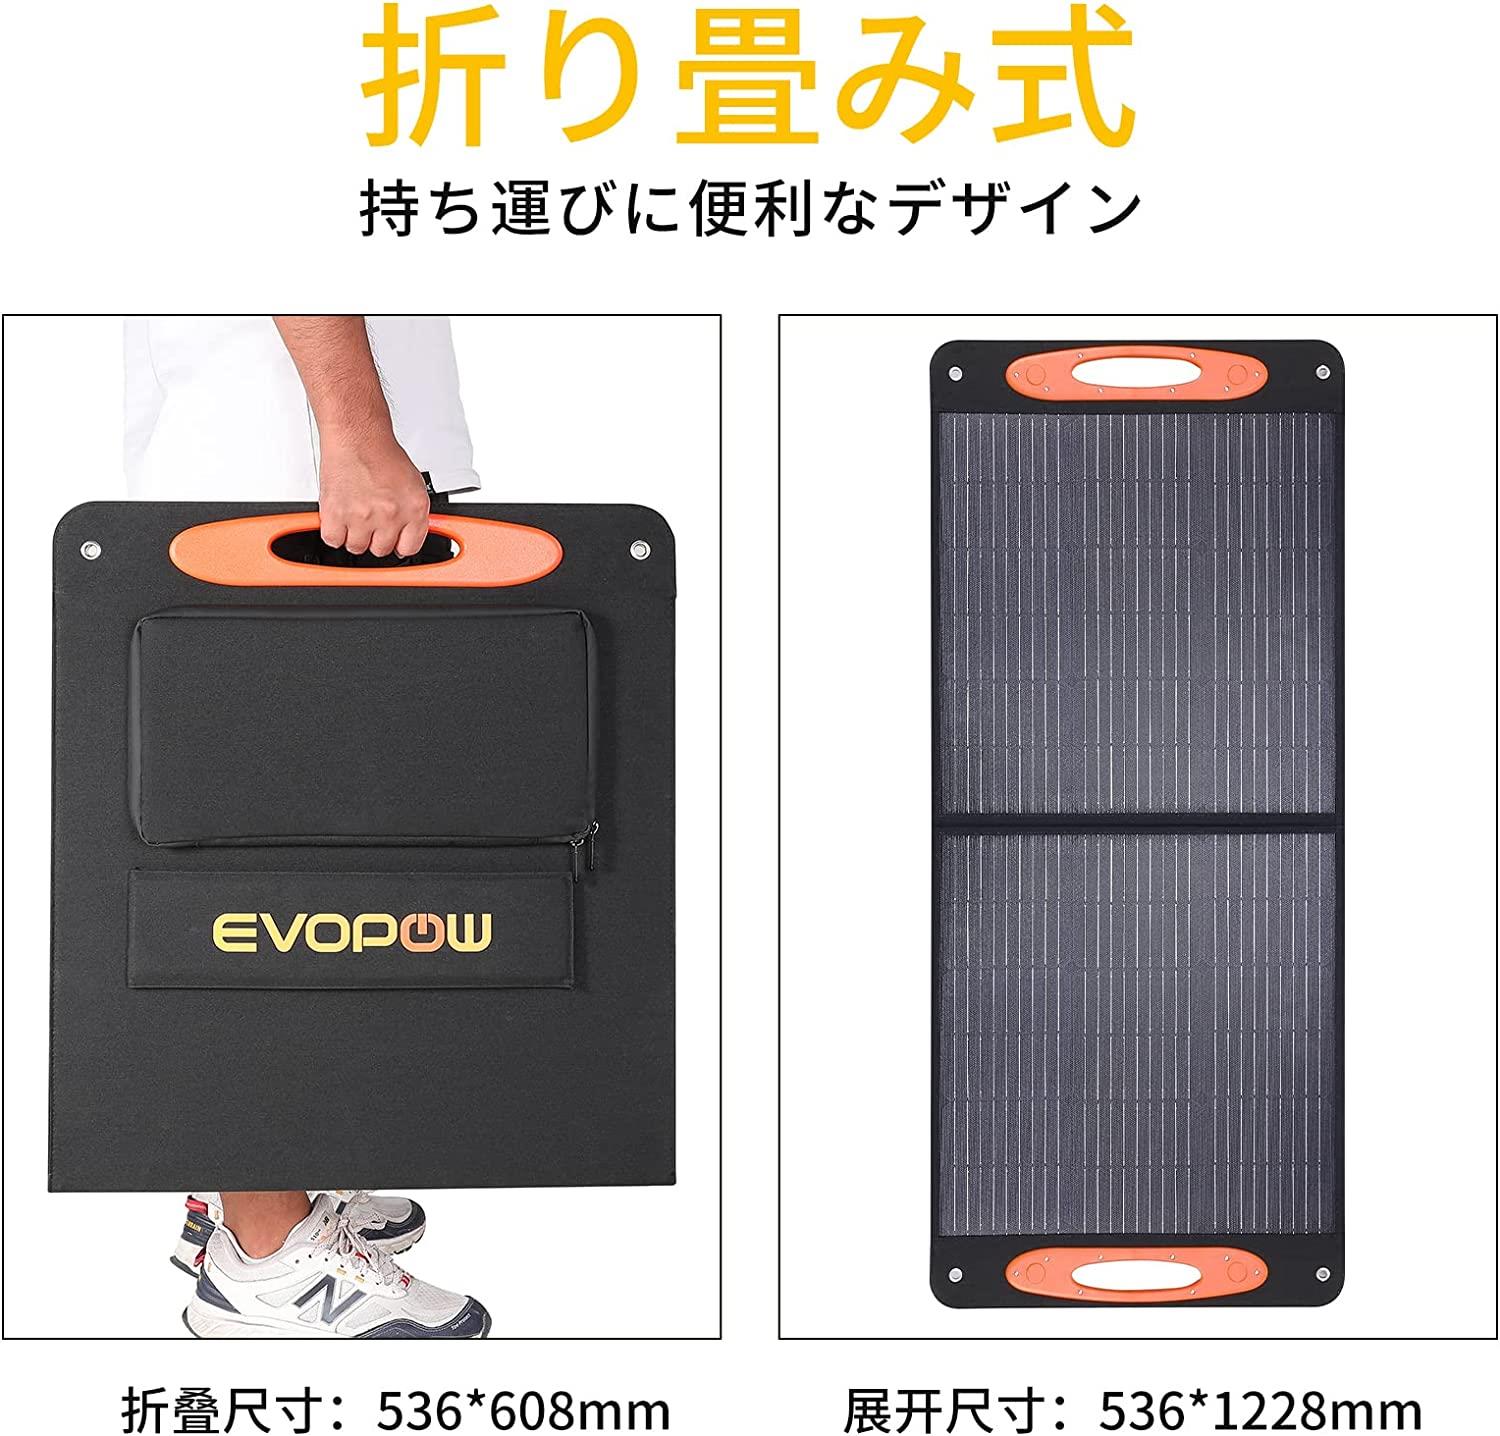 Evopow ポータブル電源 ソーラーパネルセット リン酸鉄リチウムイオン